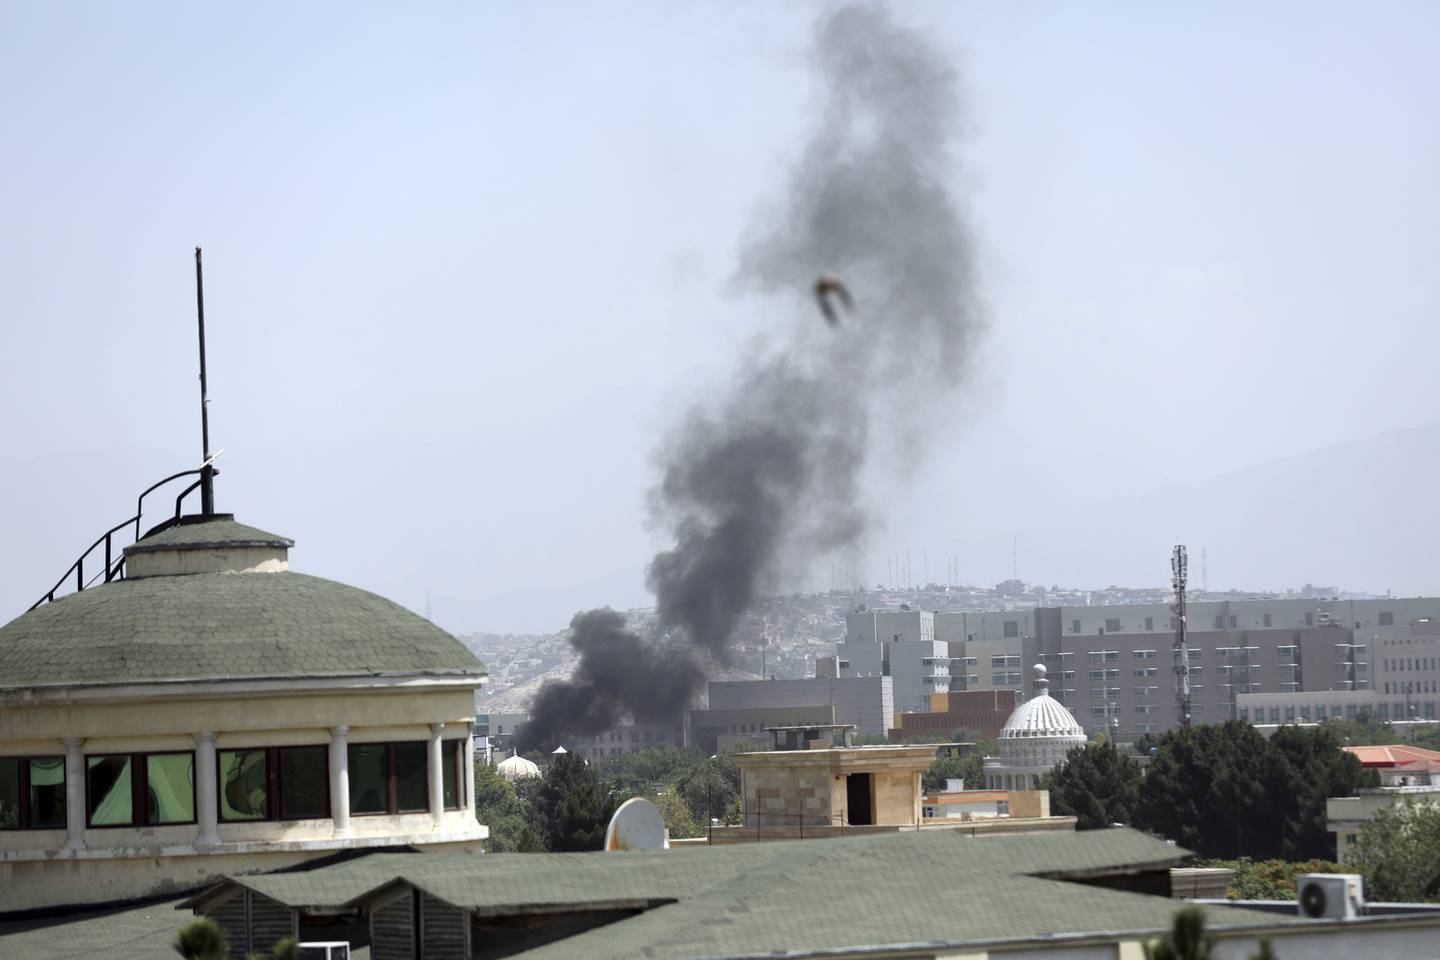 Røyk stiger opp fra den amerikanske ambassaden i Kabul, der dokumenter angivelig brennes mens amerikanerne evakuerer ambassaden. Foto: Rahmat Gul / AP / NTB